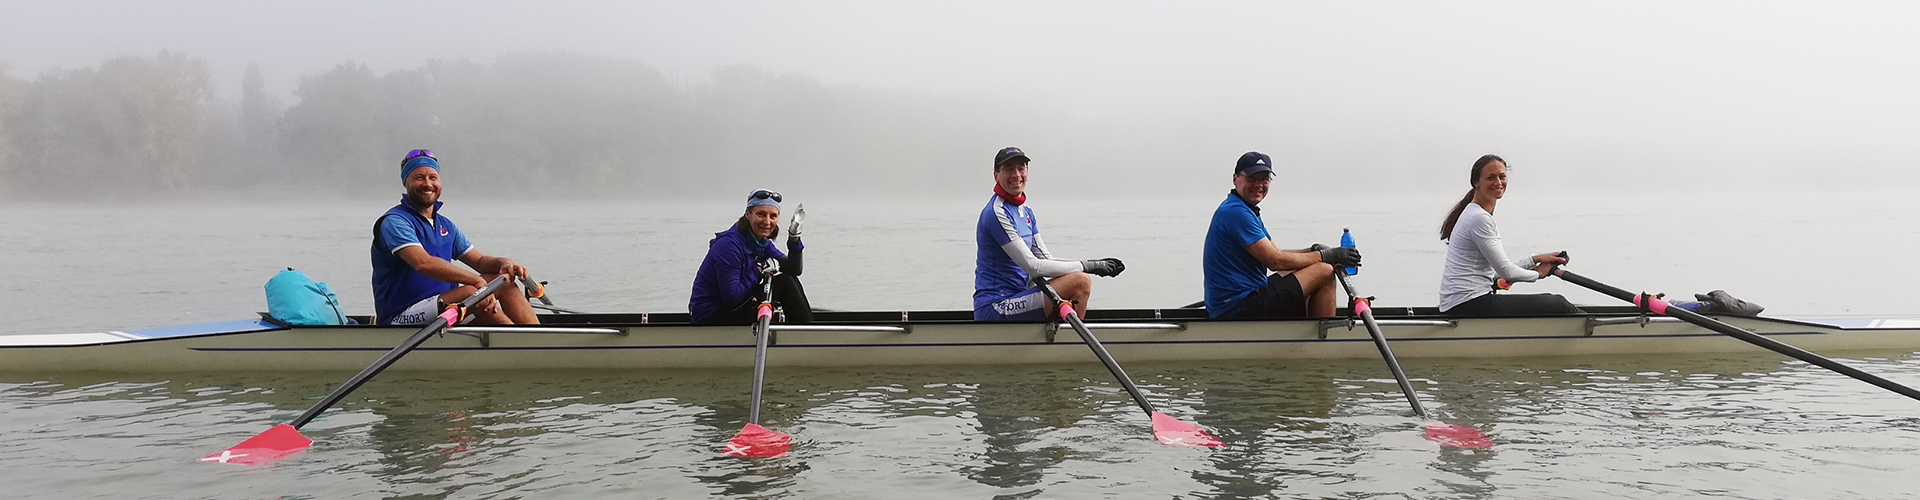 Adaptive Rowing Austria am Weissen Hof